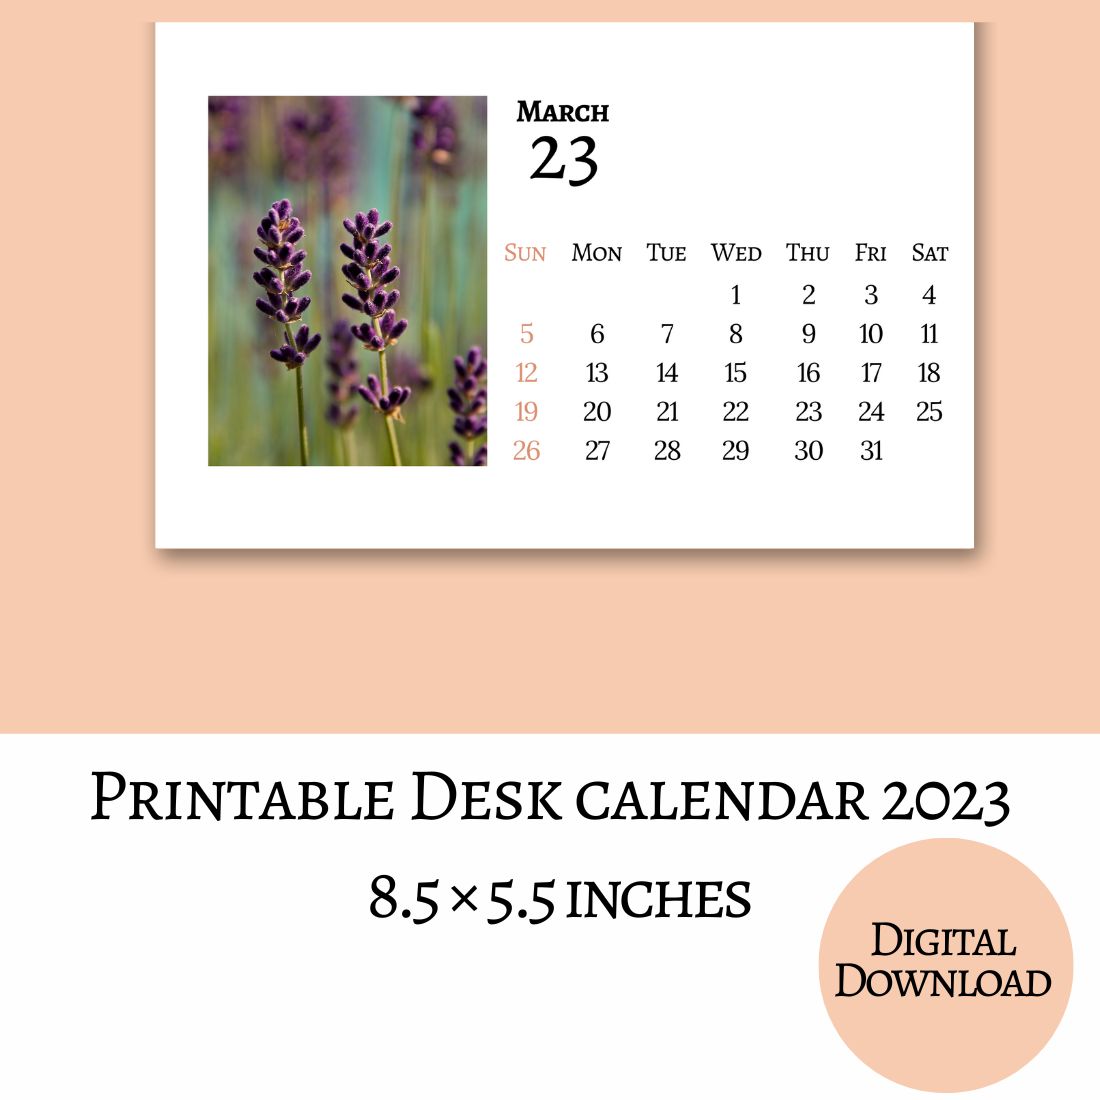 Printable Desk Calendar Horizontal preview image.